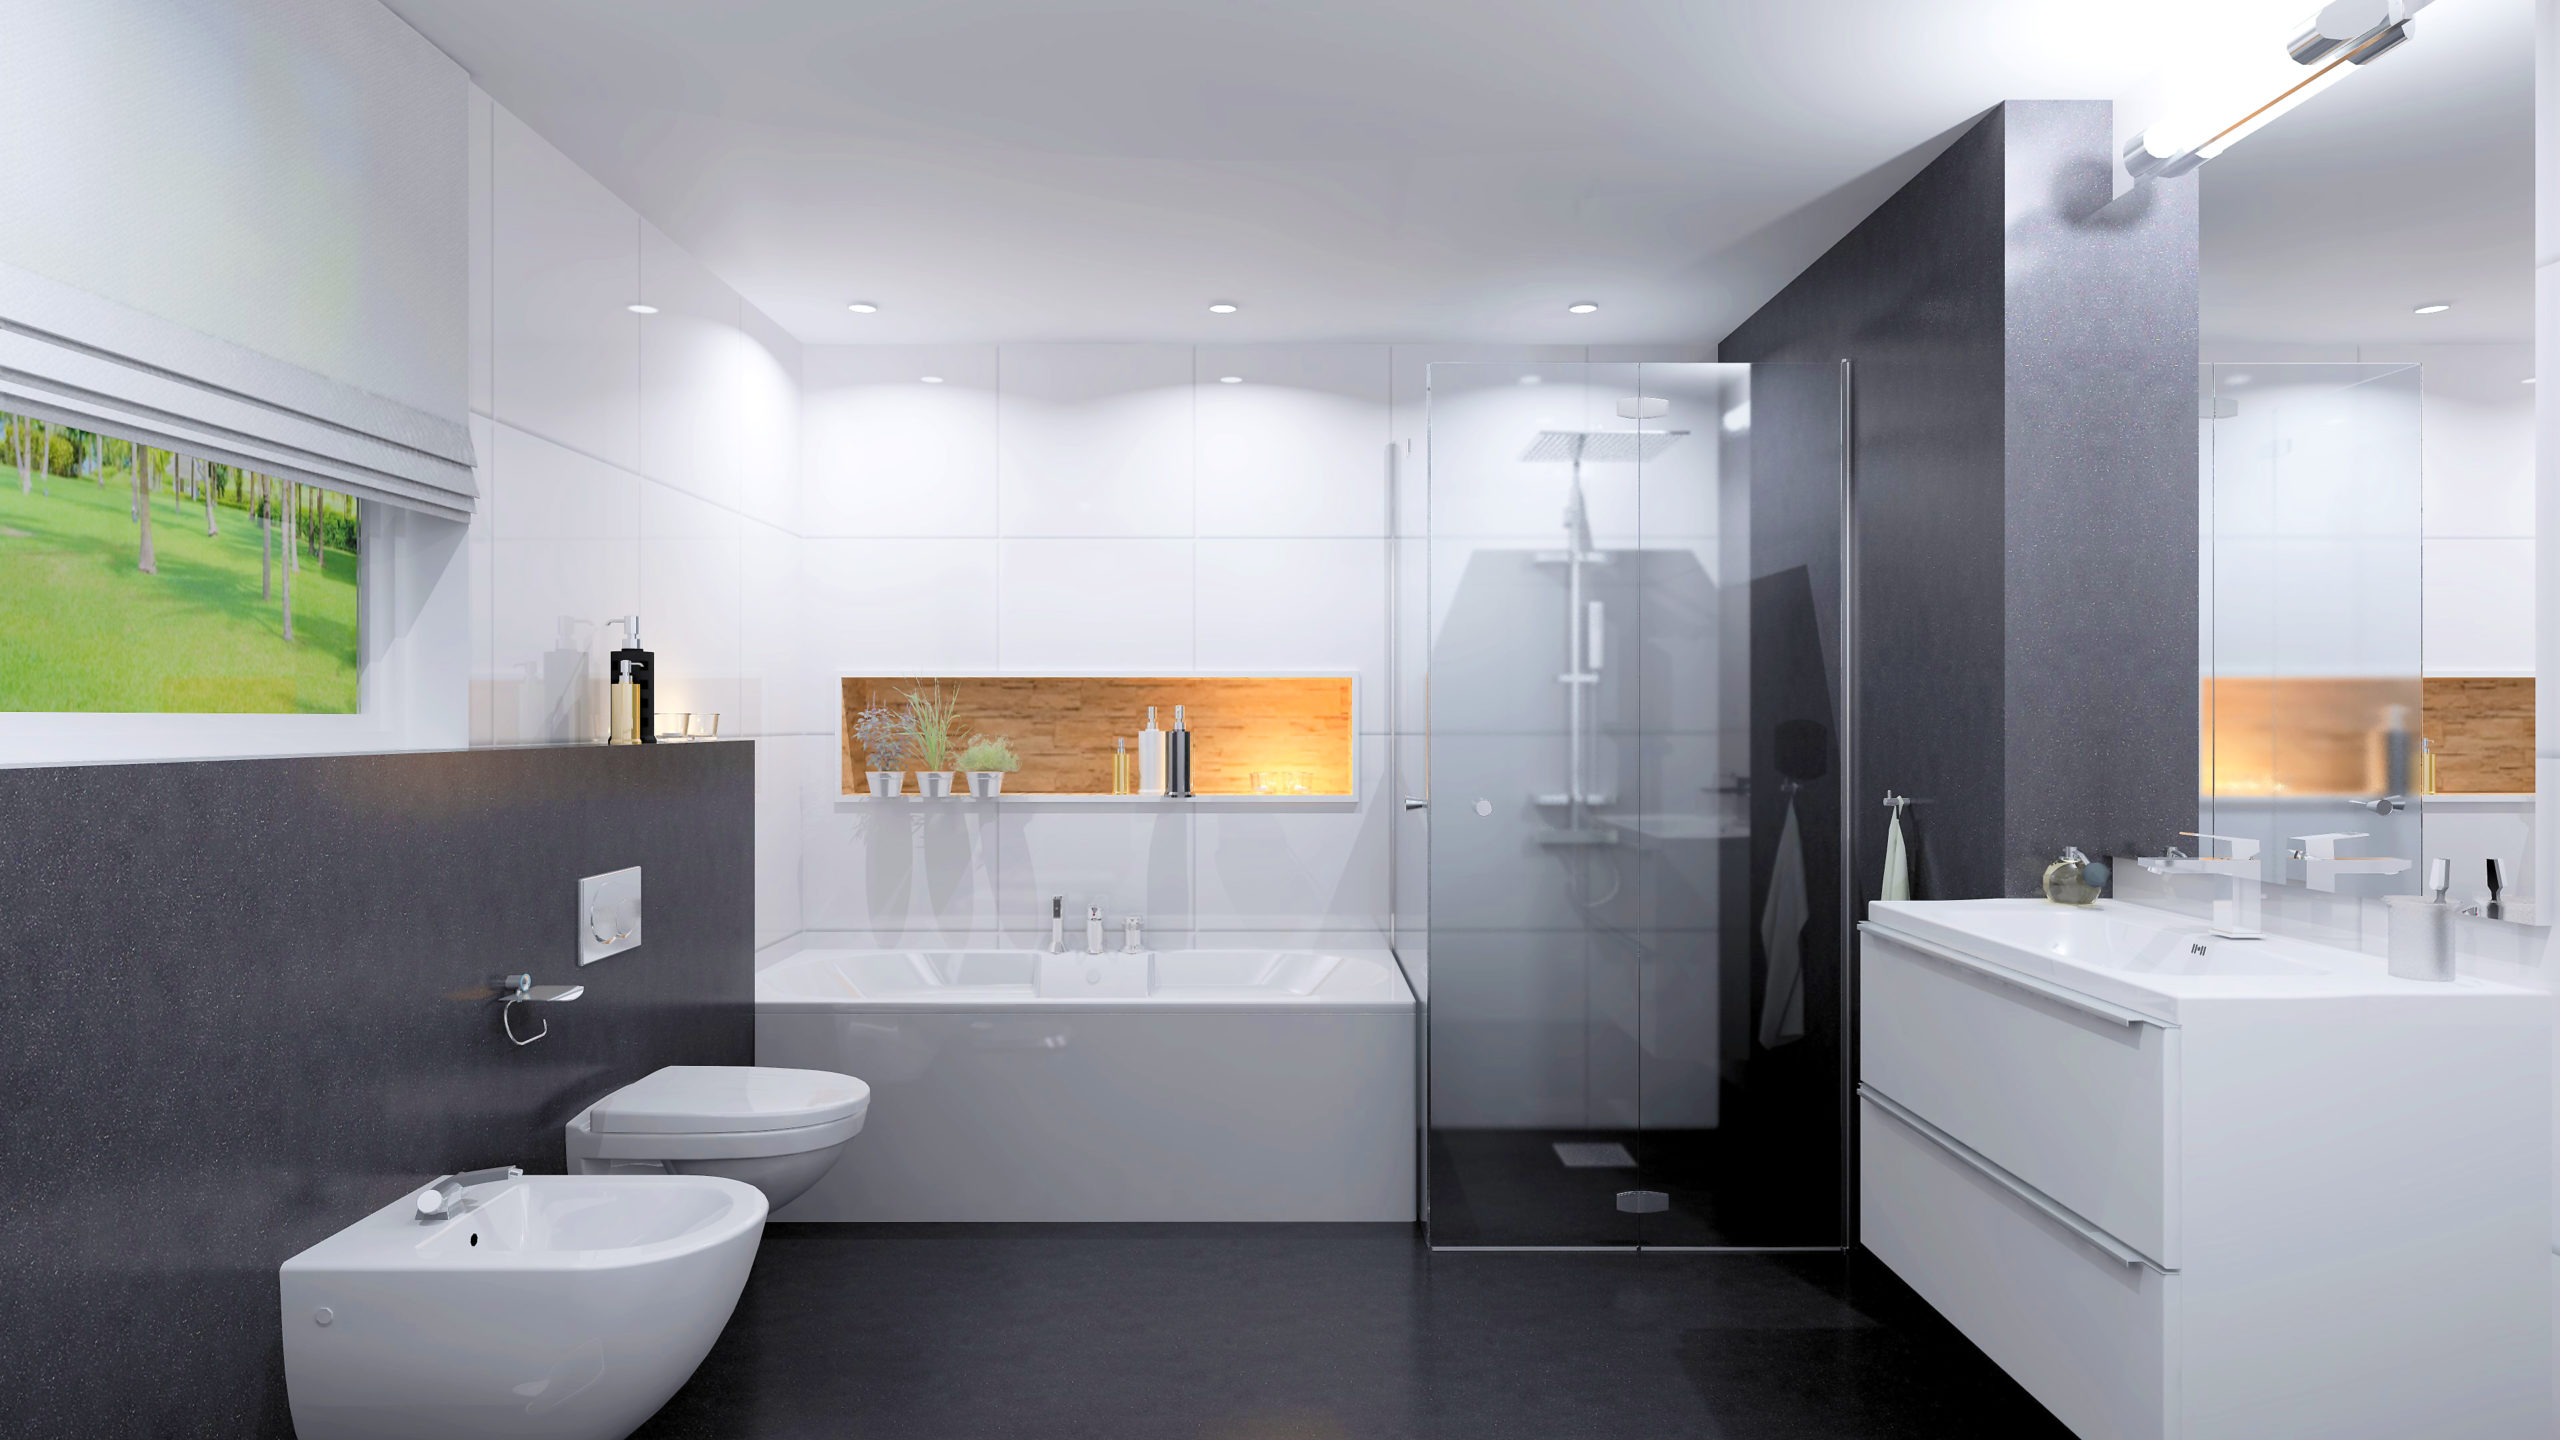 KF - Other Rooms - Modern Bathroom